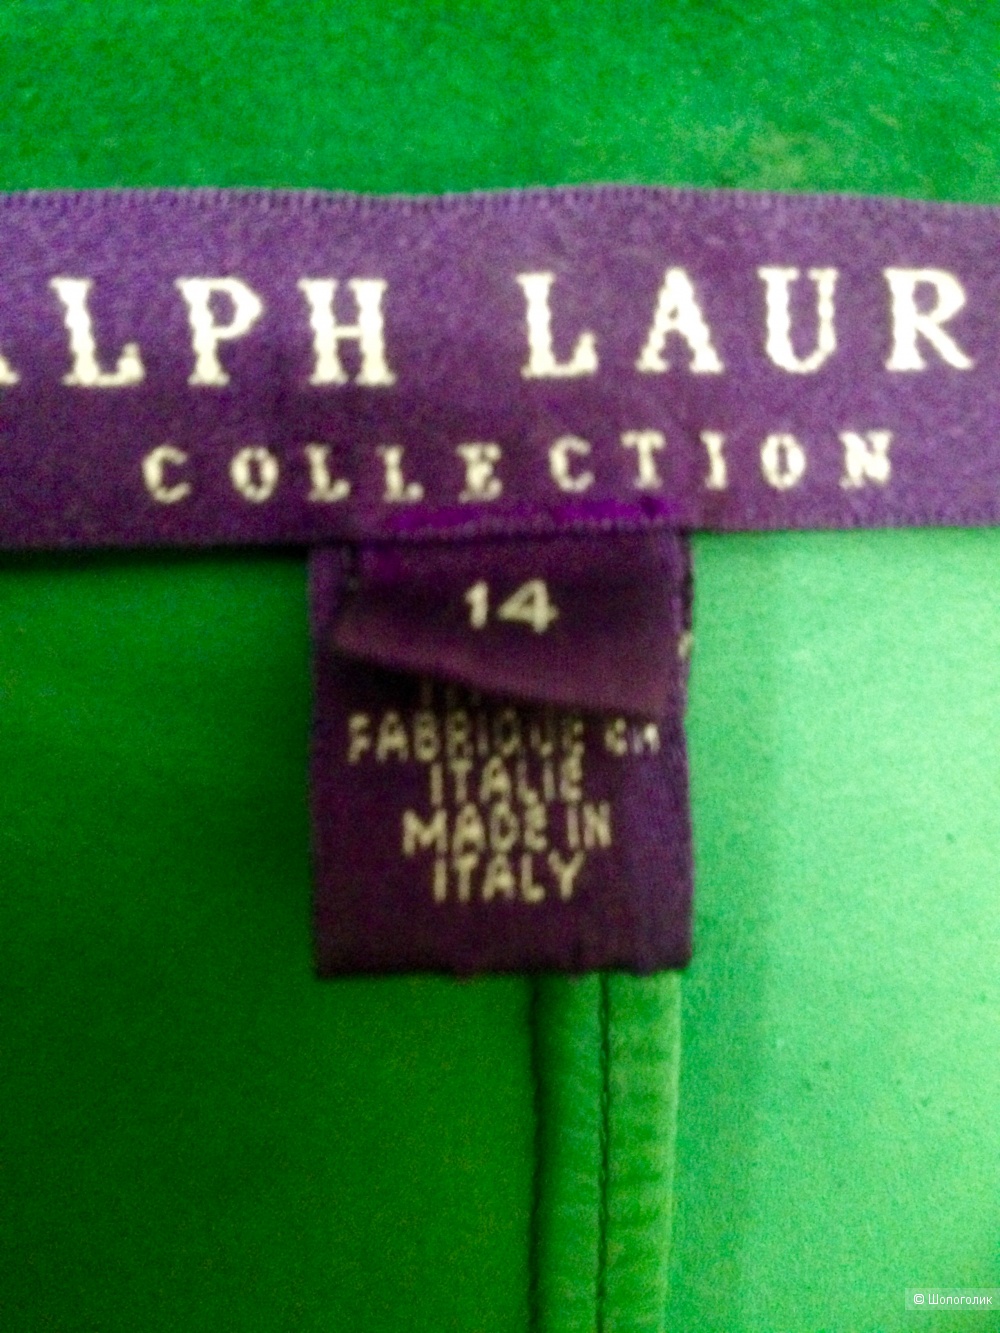 Плащ Ralph Lauren Collection 14